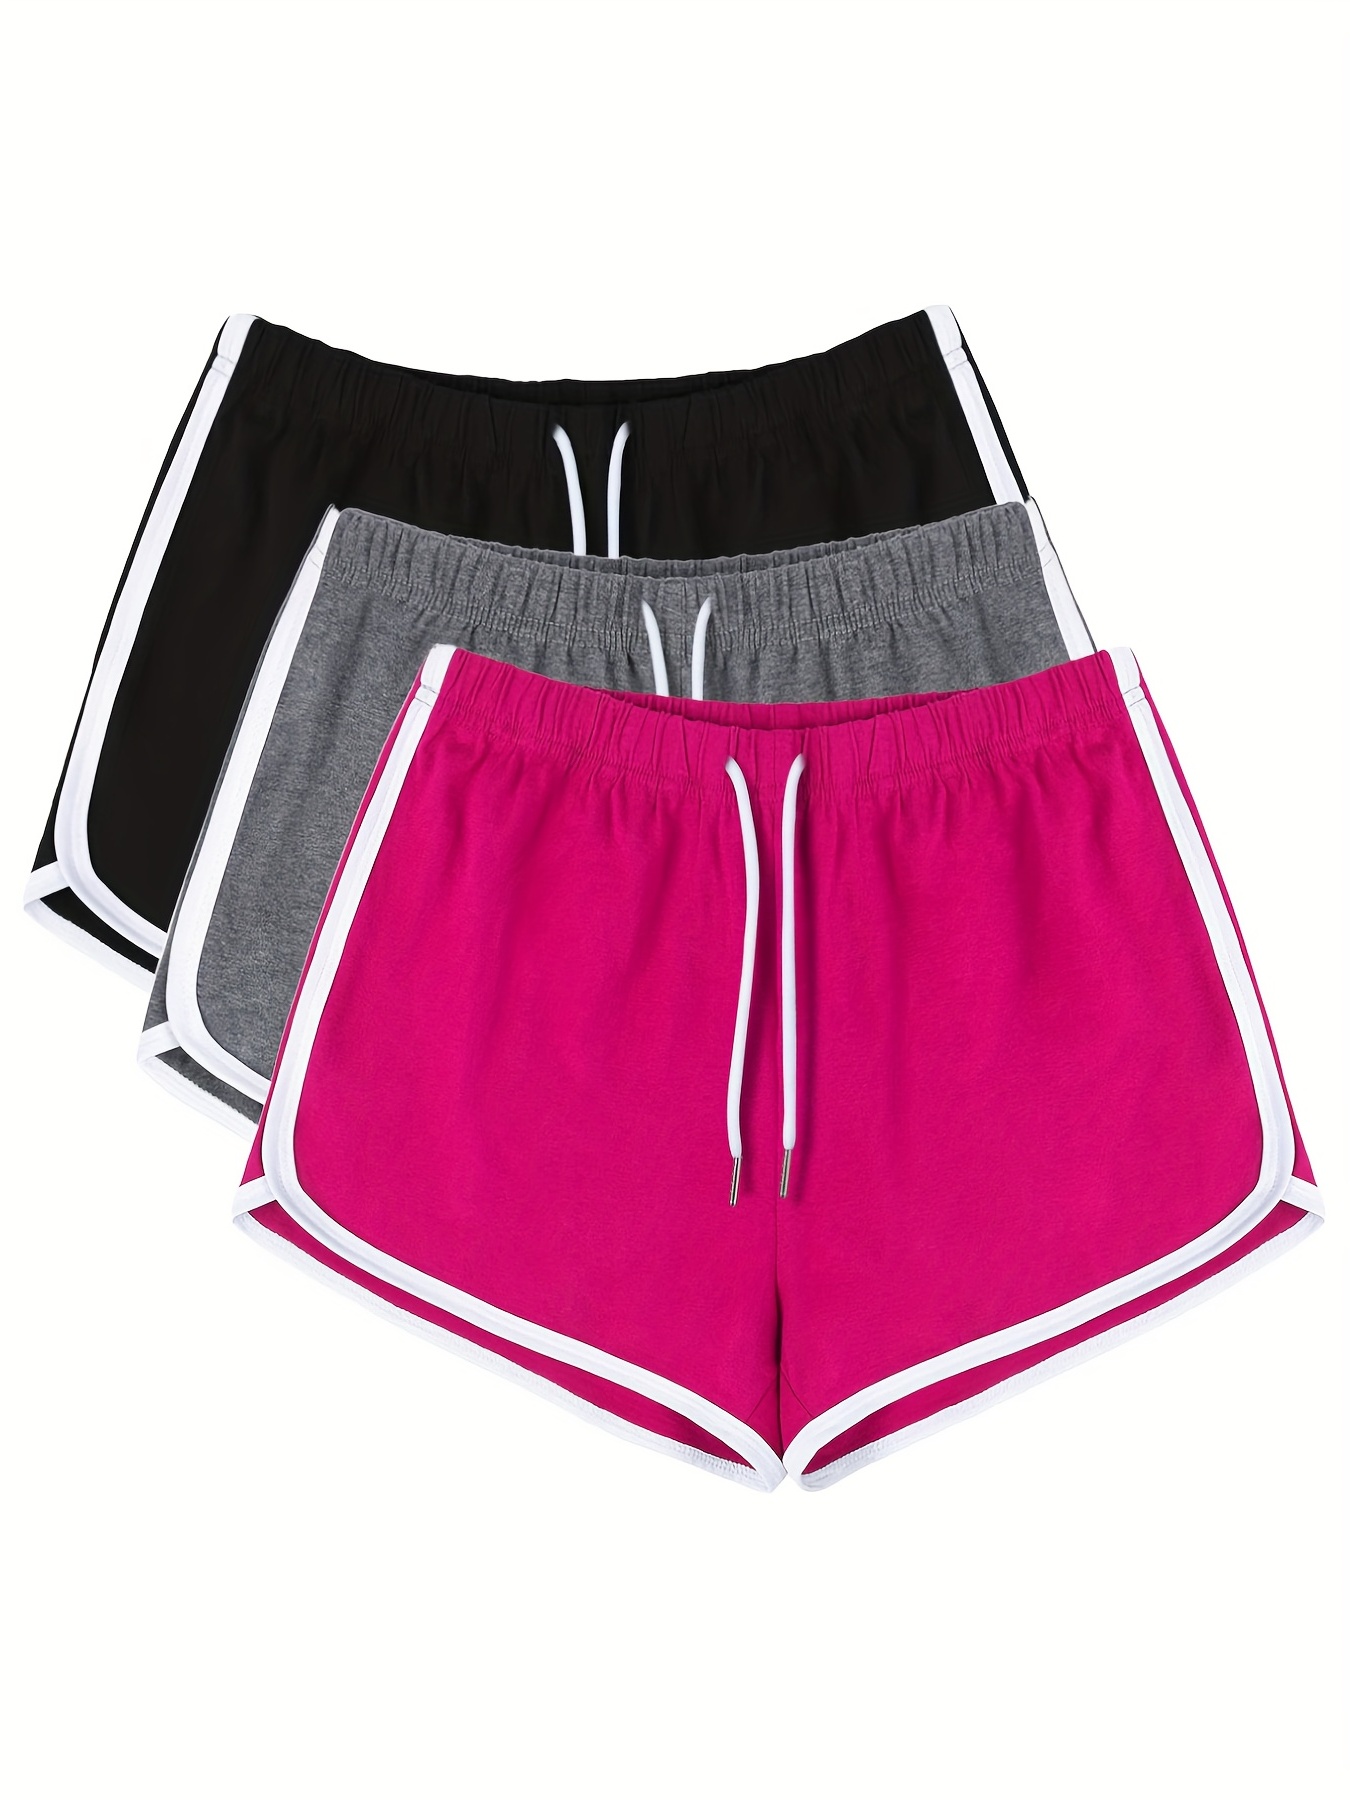 Womens Shorts Women's Workout Running Shorts Elastic High Waisted Athletic  Shorts Yoga Sport Gym Shorts Short, Dark Red, L